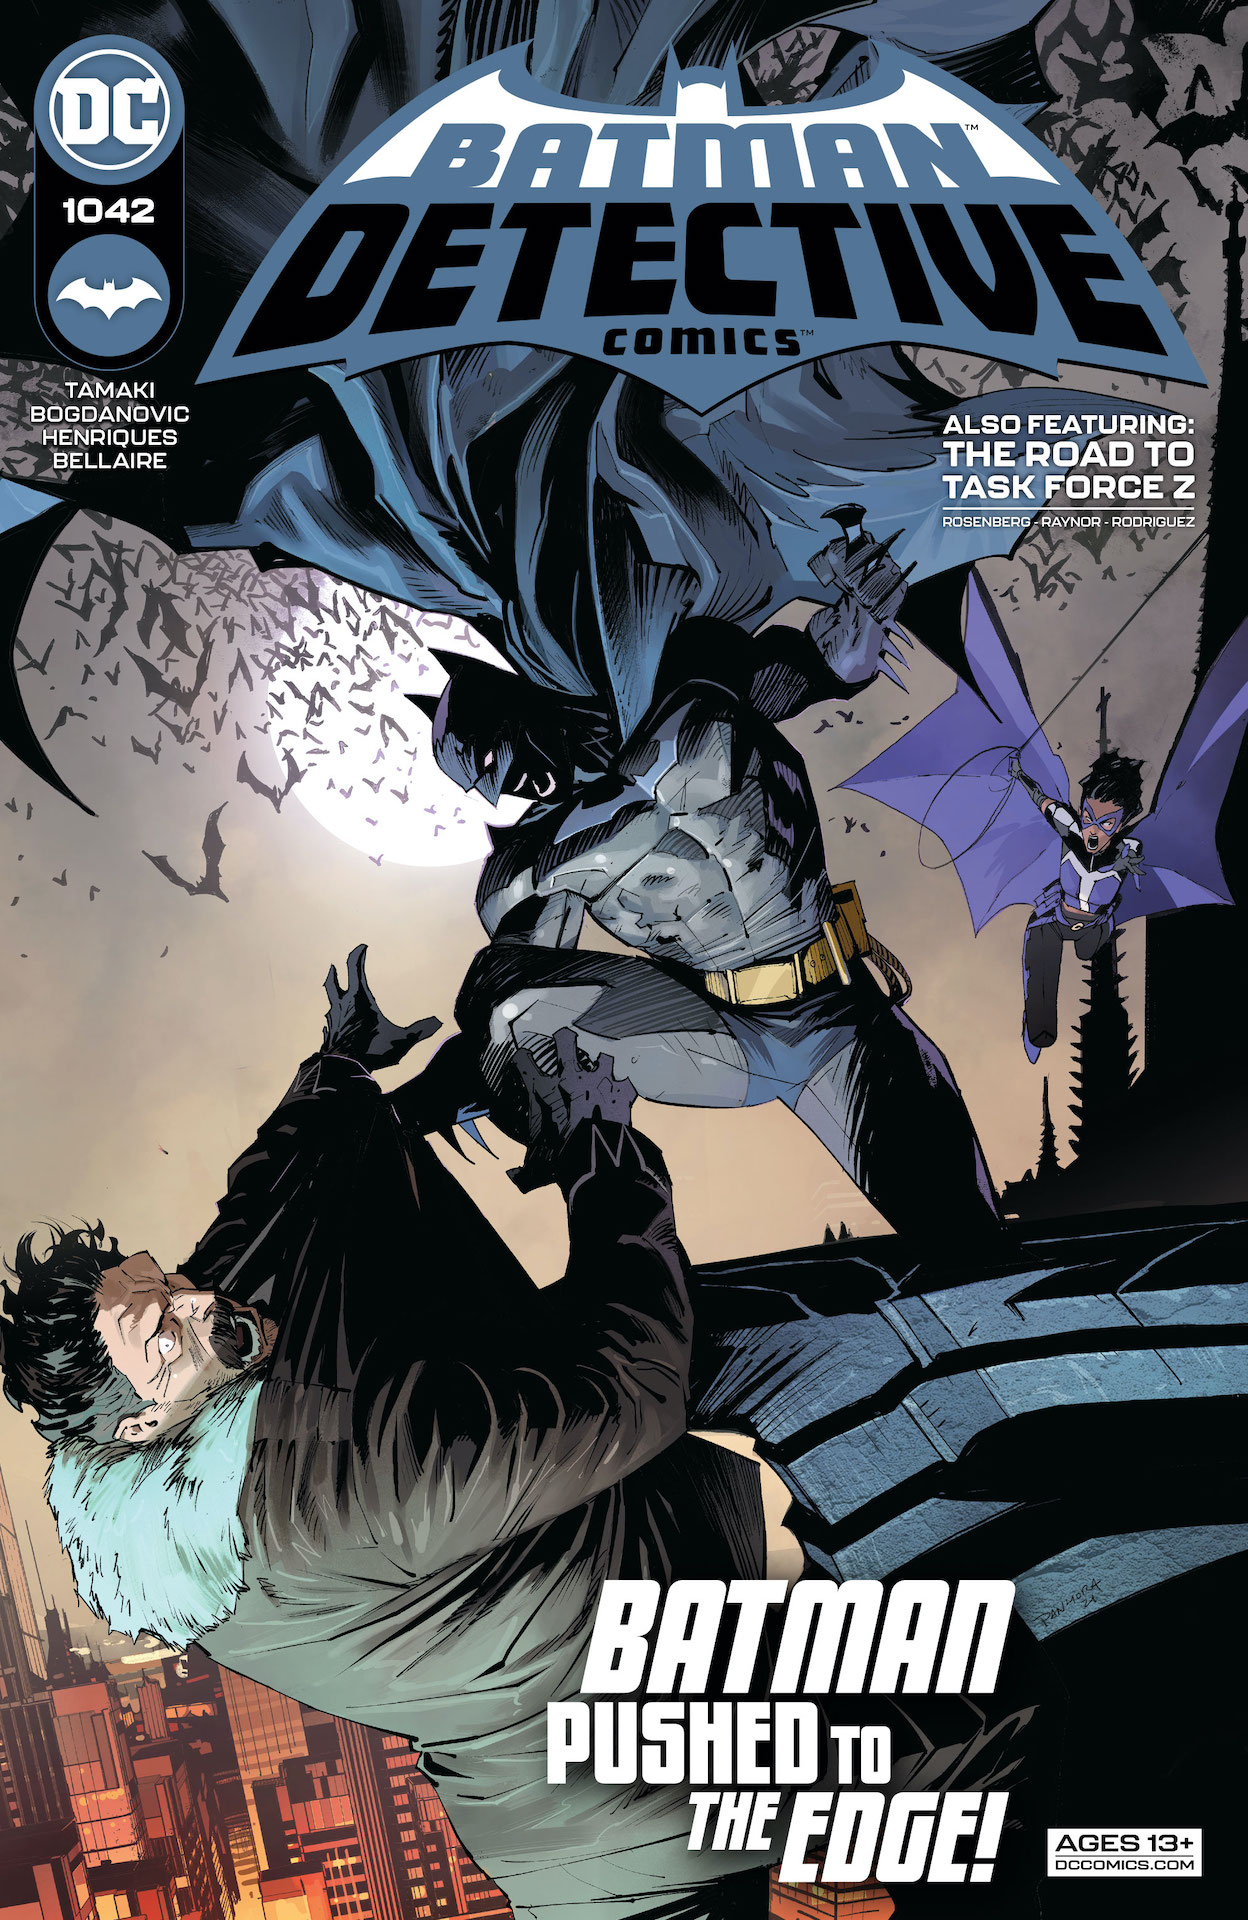 DC Preview: Detective Comics #1042